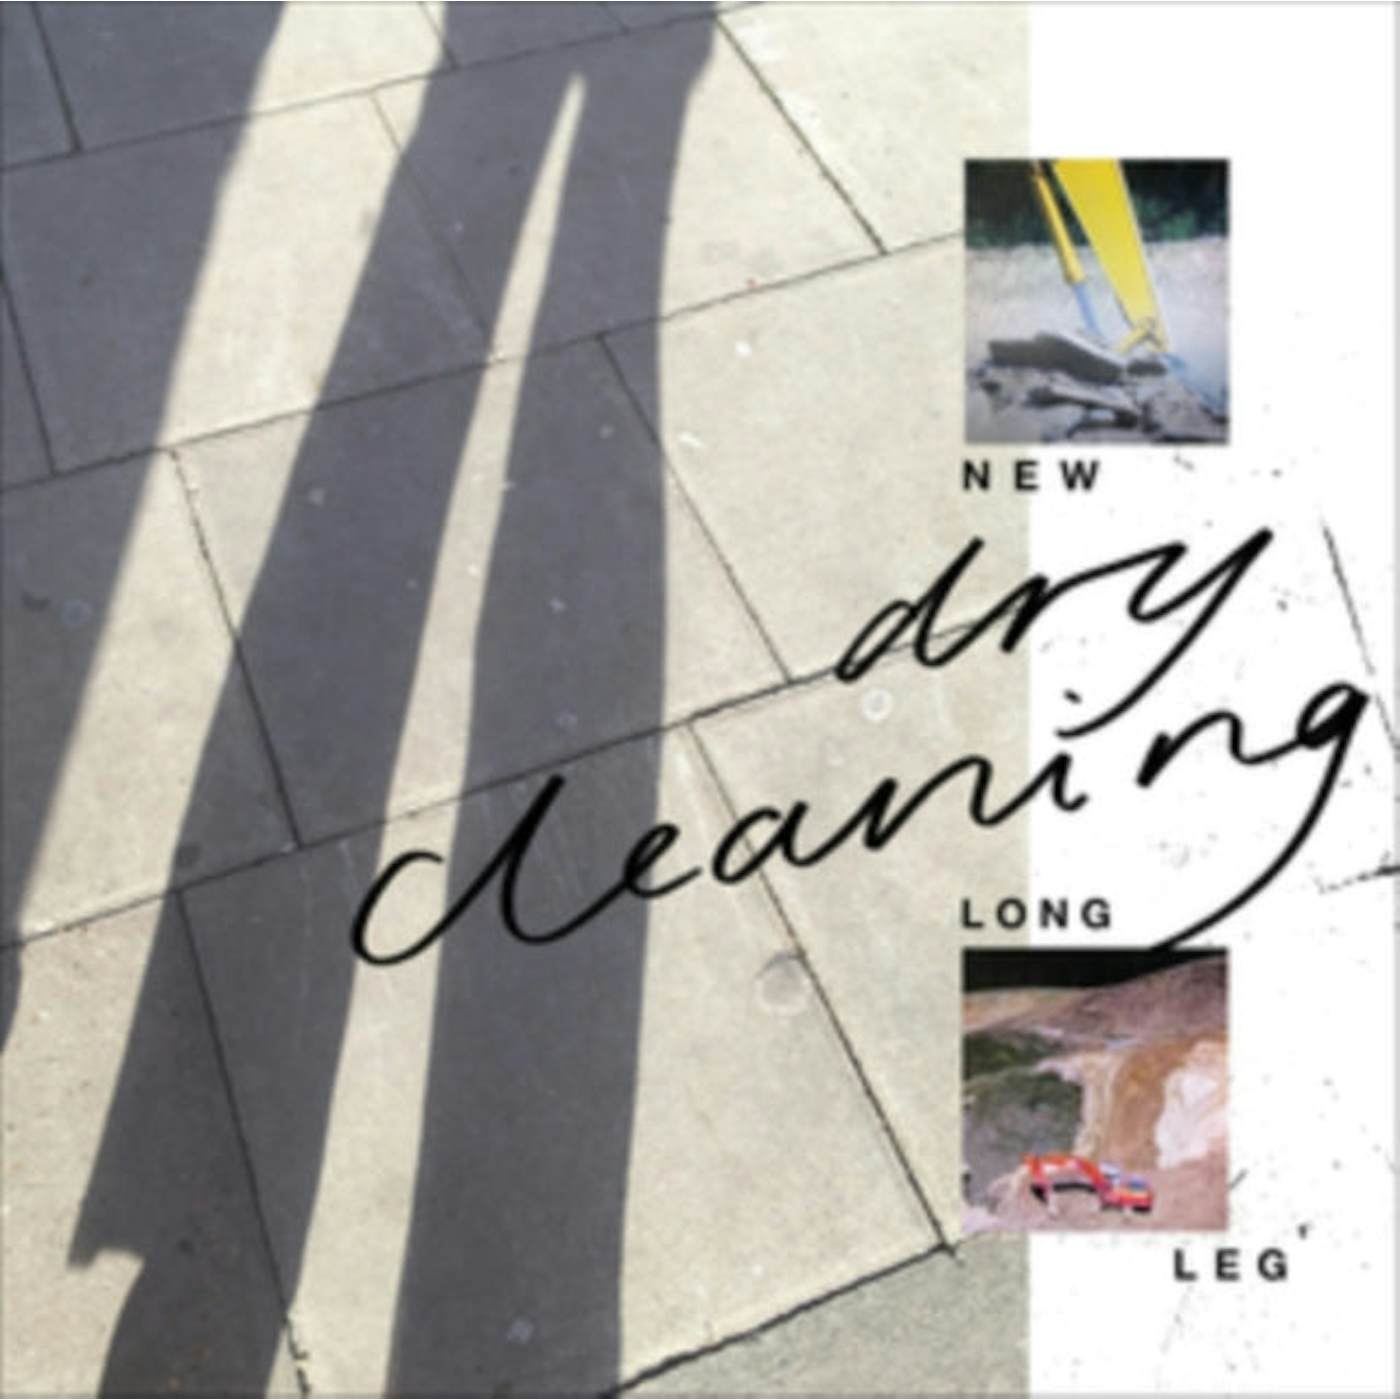 Dry Cleaning LP Vinyl Record - New Long Leg